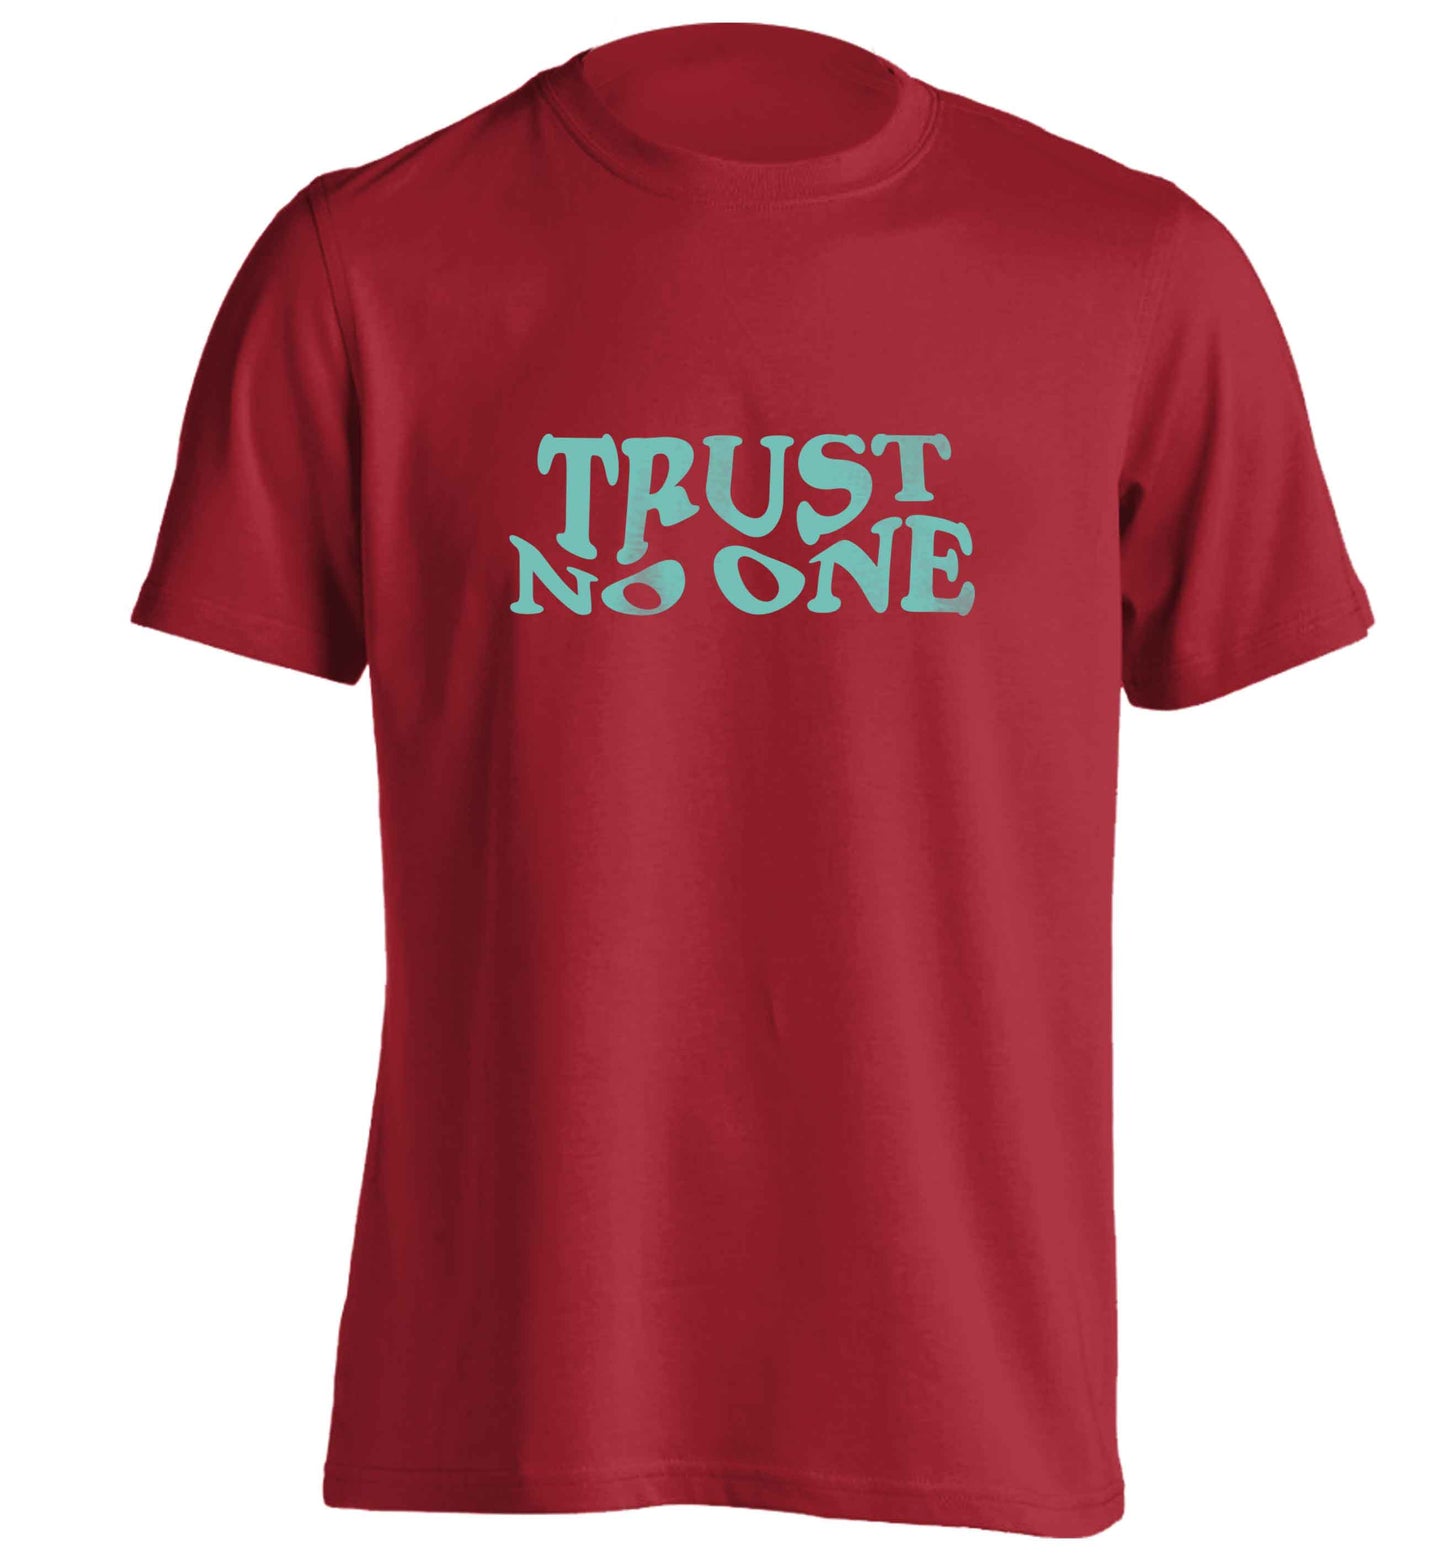 Trust no one adults unisex red Tshirt 2XL